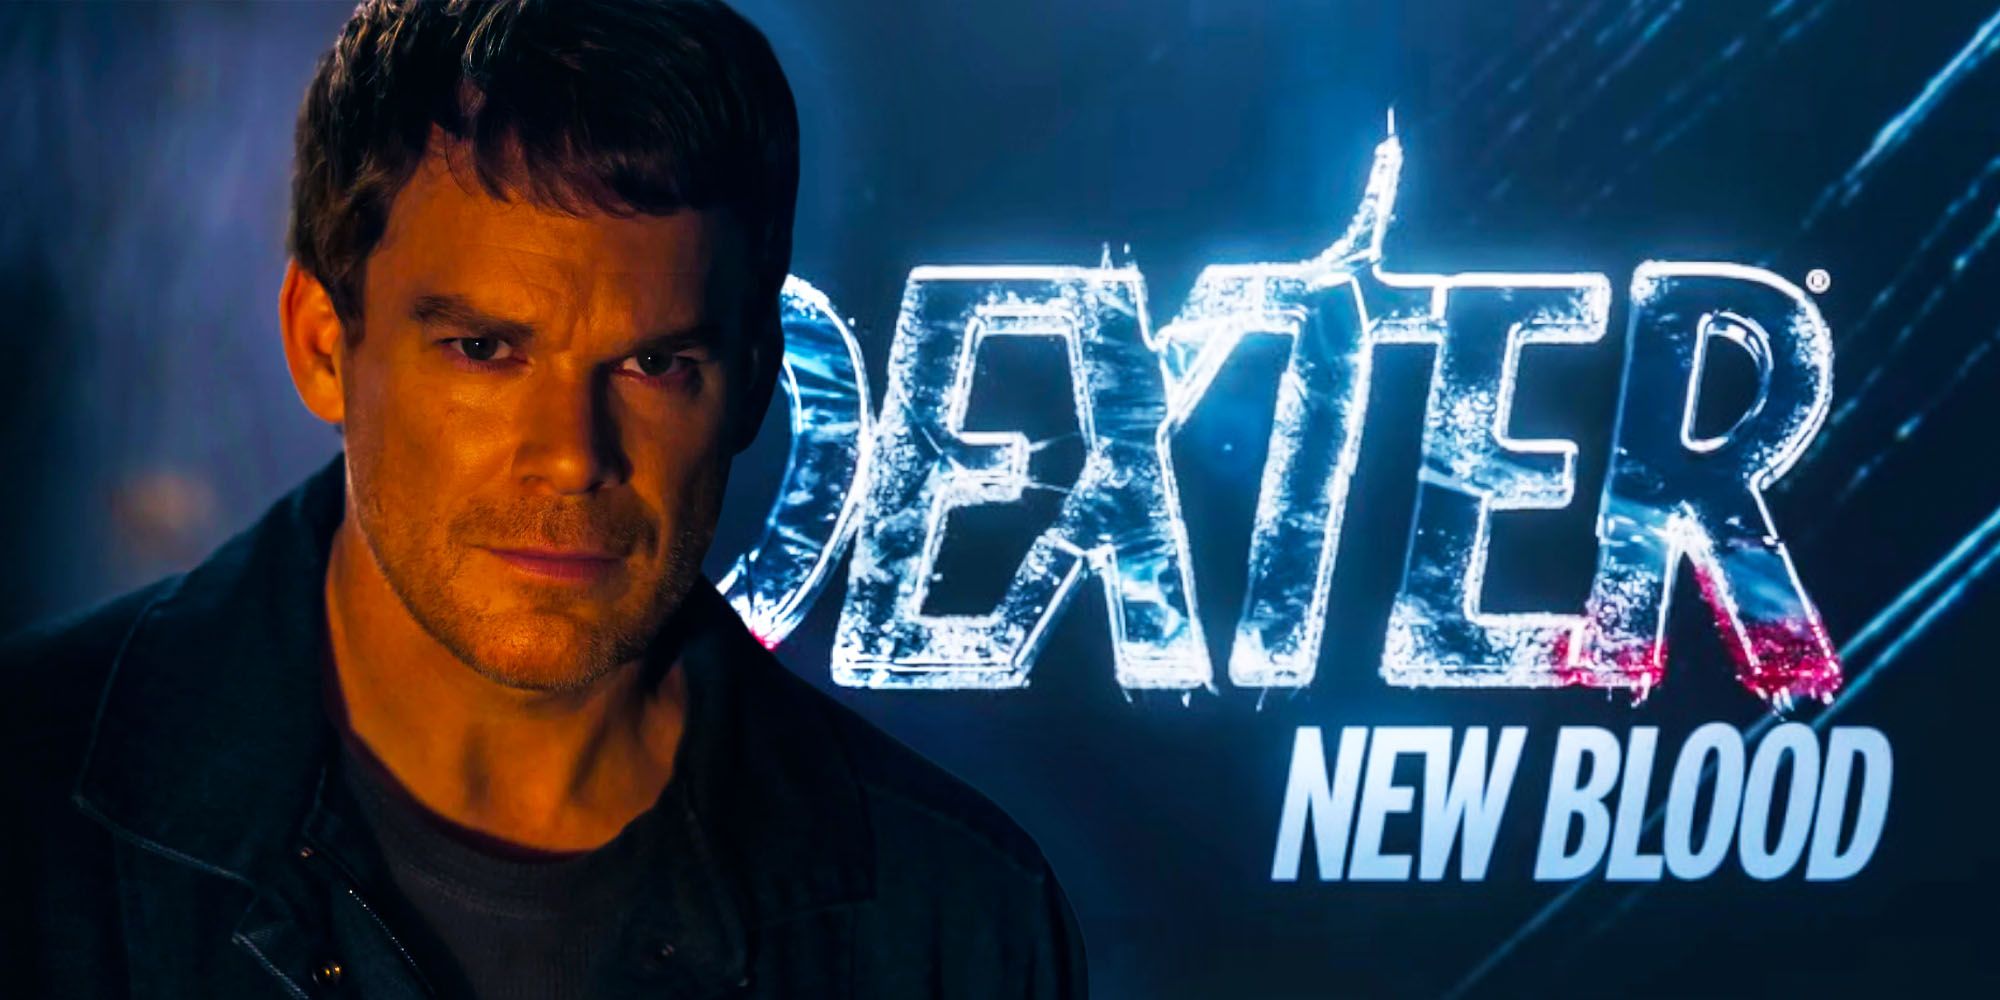 Dexter season 9 New Blood title meaning